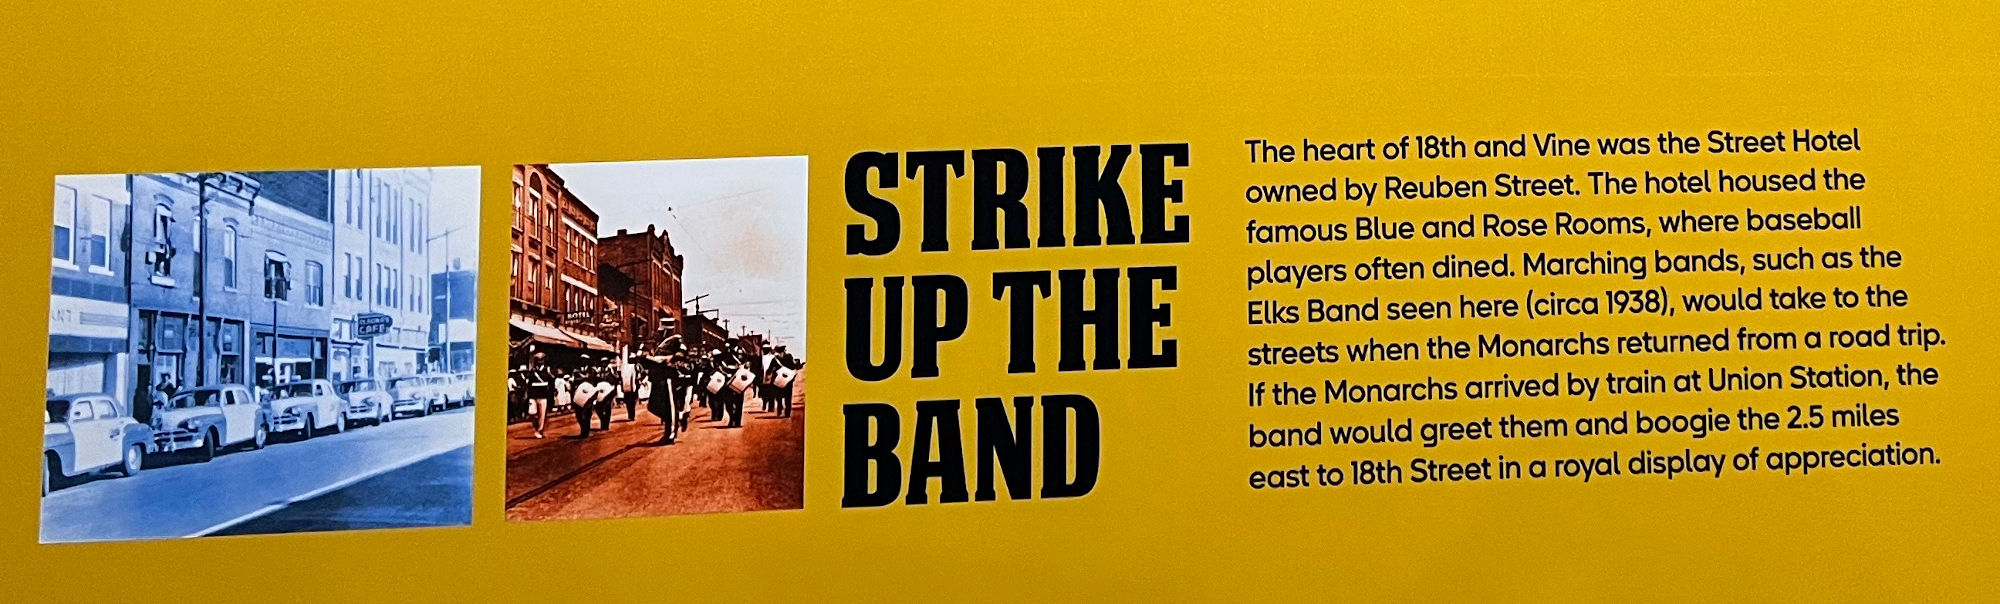 Baseball Museum Strike up the Band